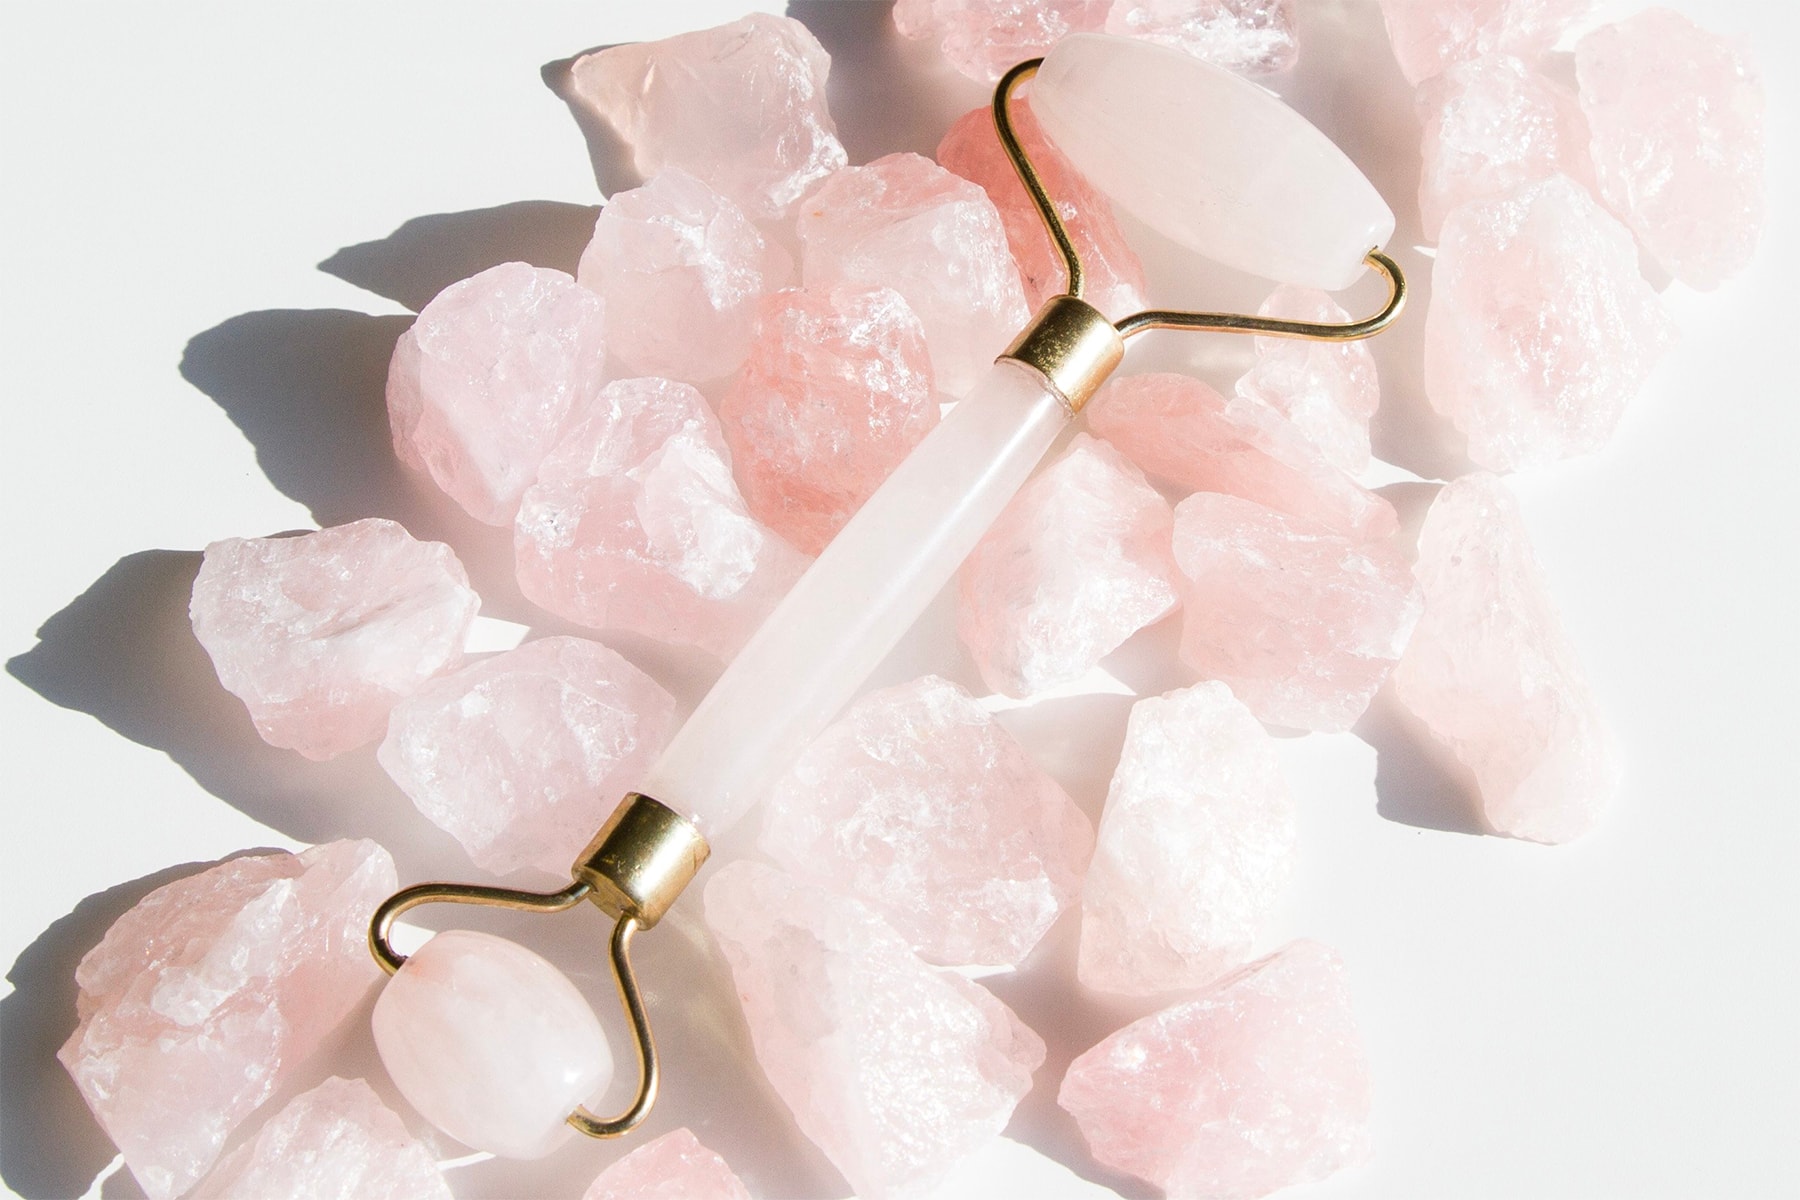 Herbivore Botanicals Rose Quartz Facial Roller Pink Millennial Pastel Gemstone Beauty Skincare